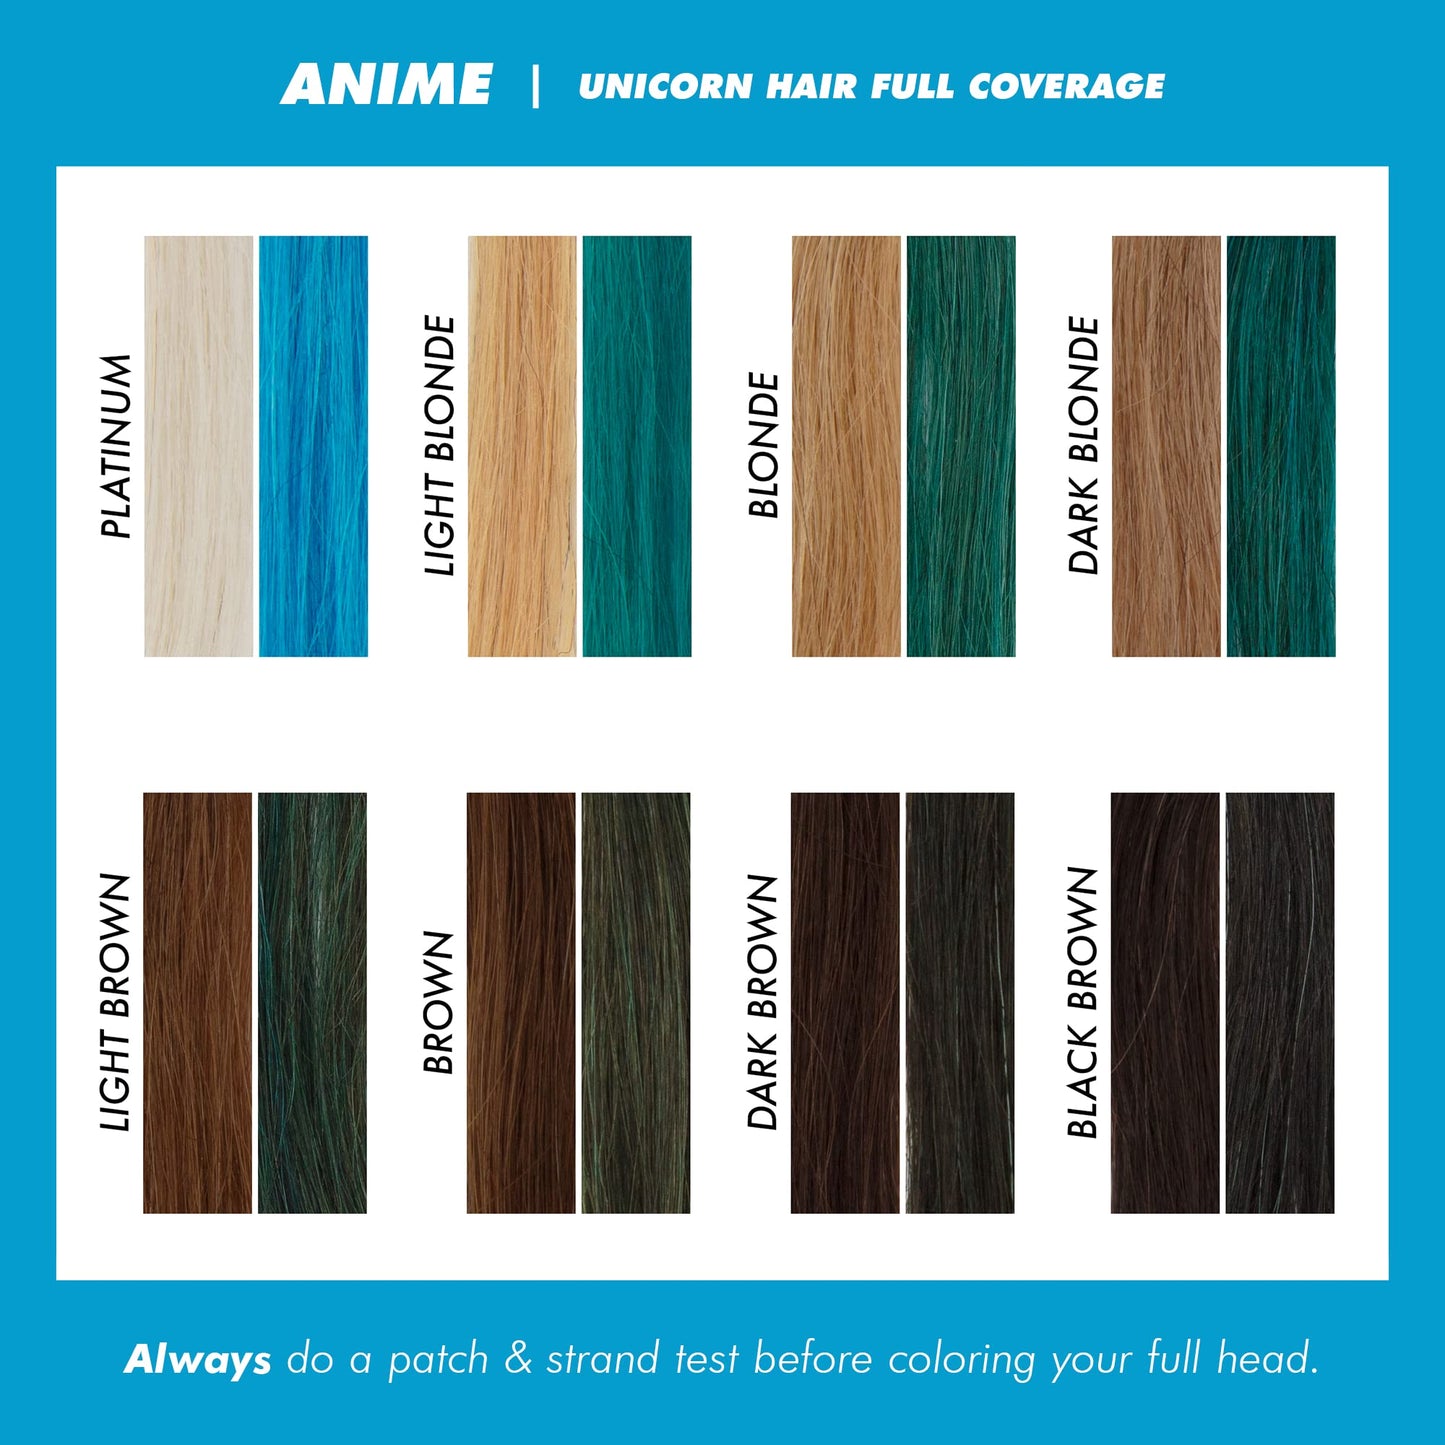 Lime Crime Unicorn Hair Semi-Permanent Full Coverage - Anime - 6.76 fl oz